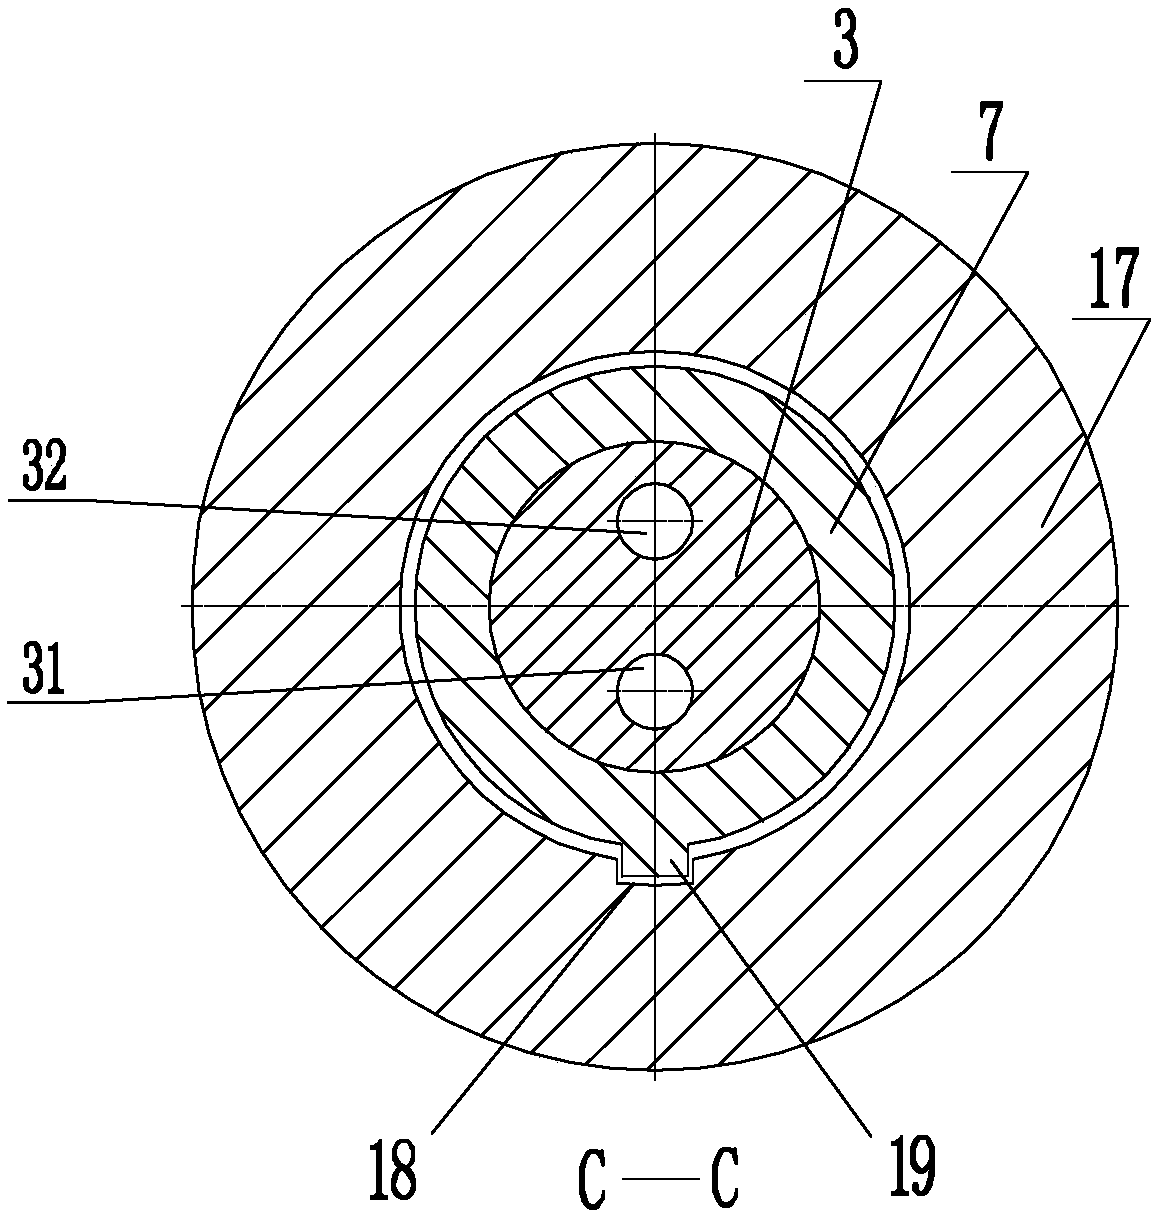 A rotary liquid supply device